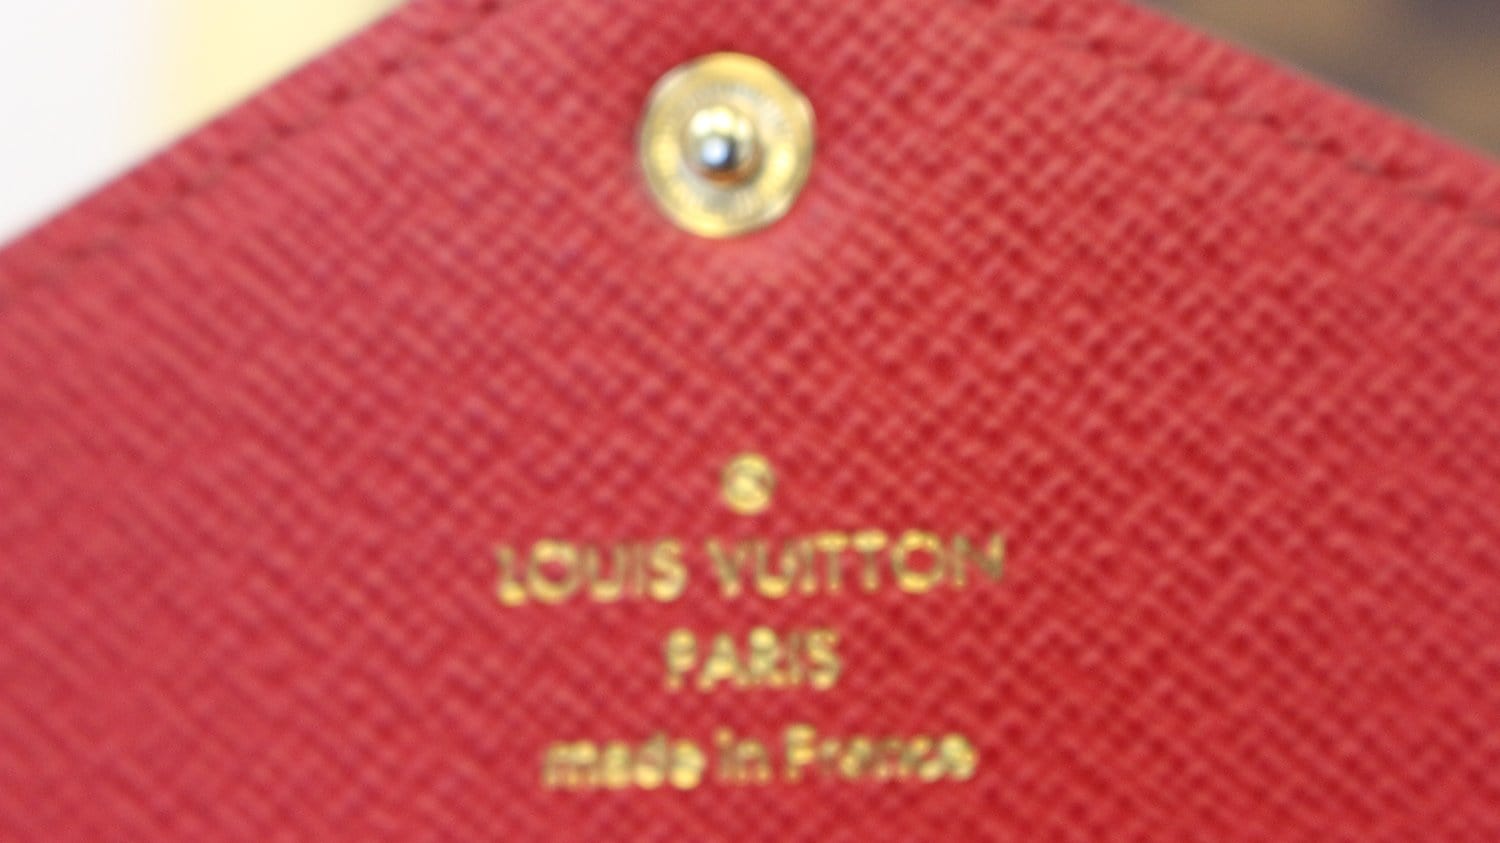 LOUIS VUITTON Damier Ebene Josephine Wallet Zippered Insert Red 1242133